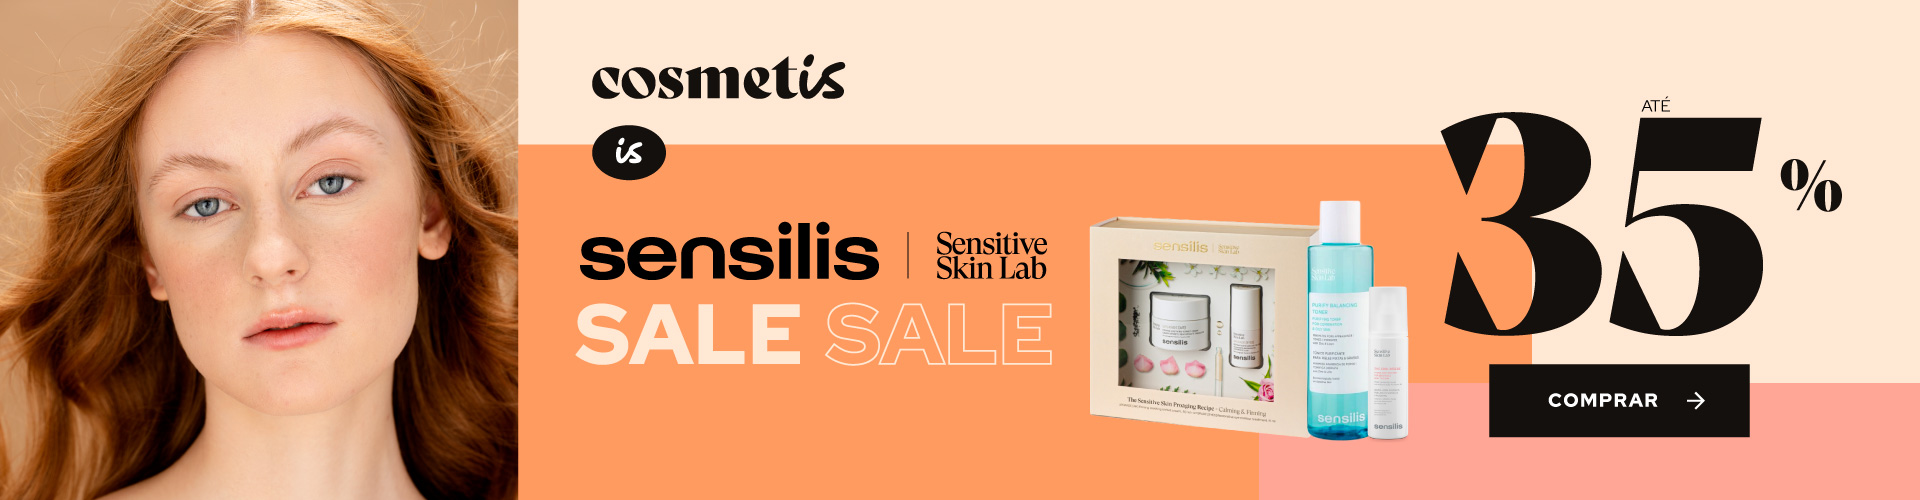 Cosmetis is Sensilis Sale 